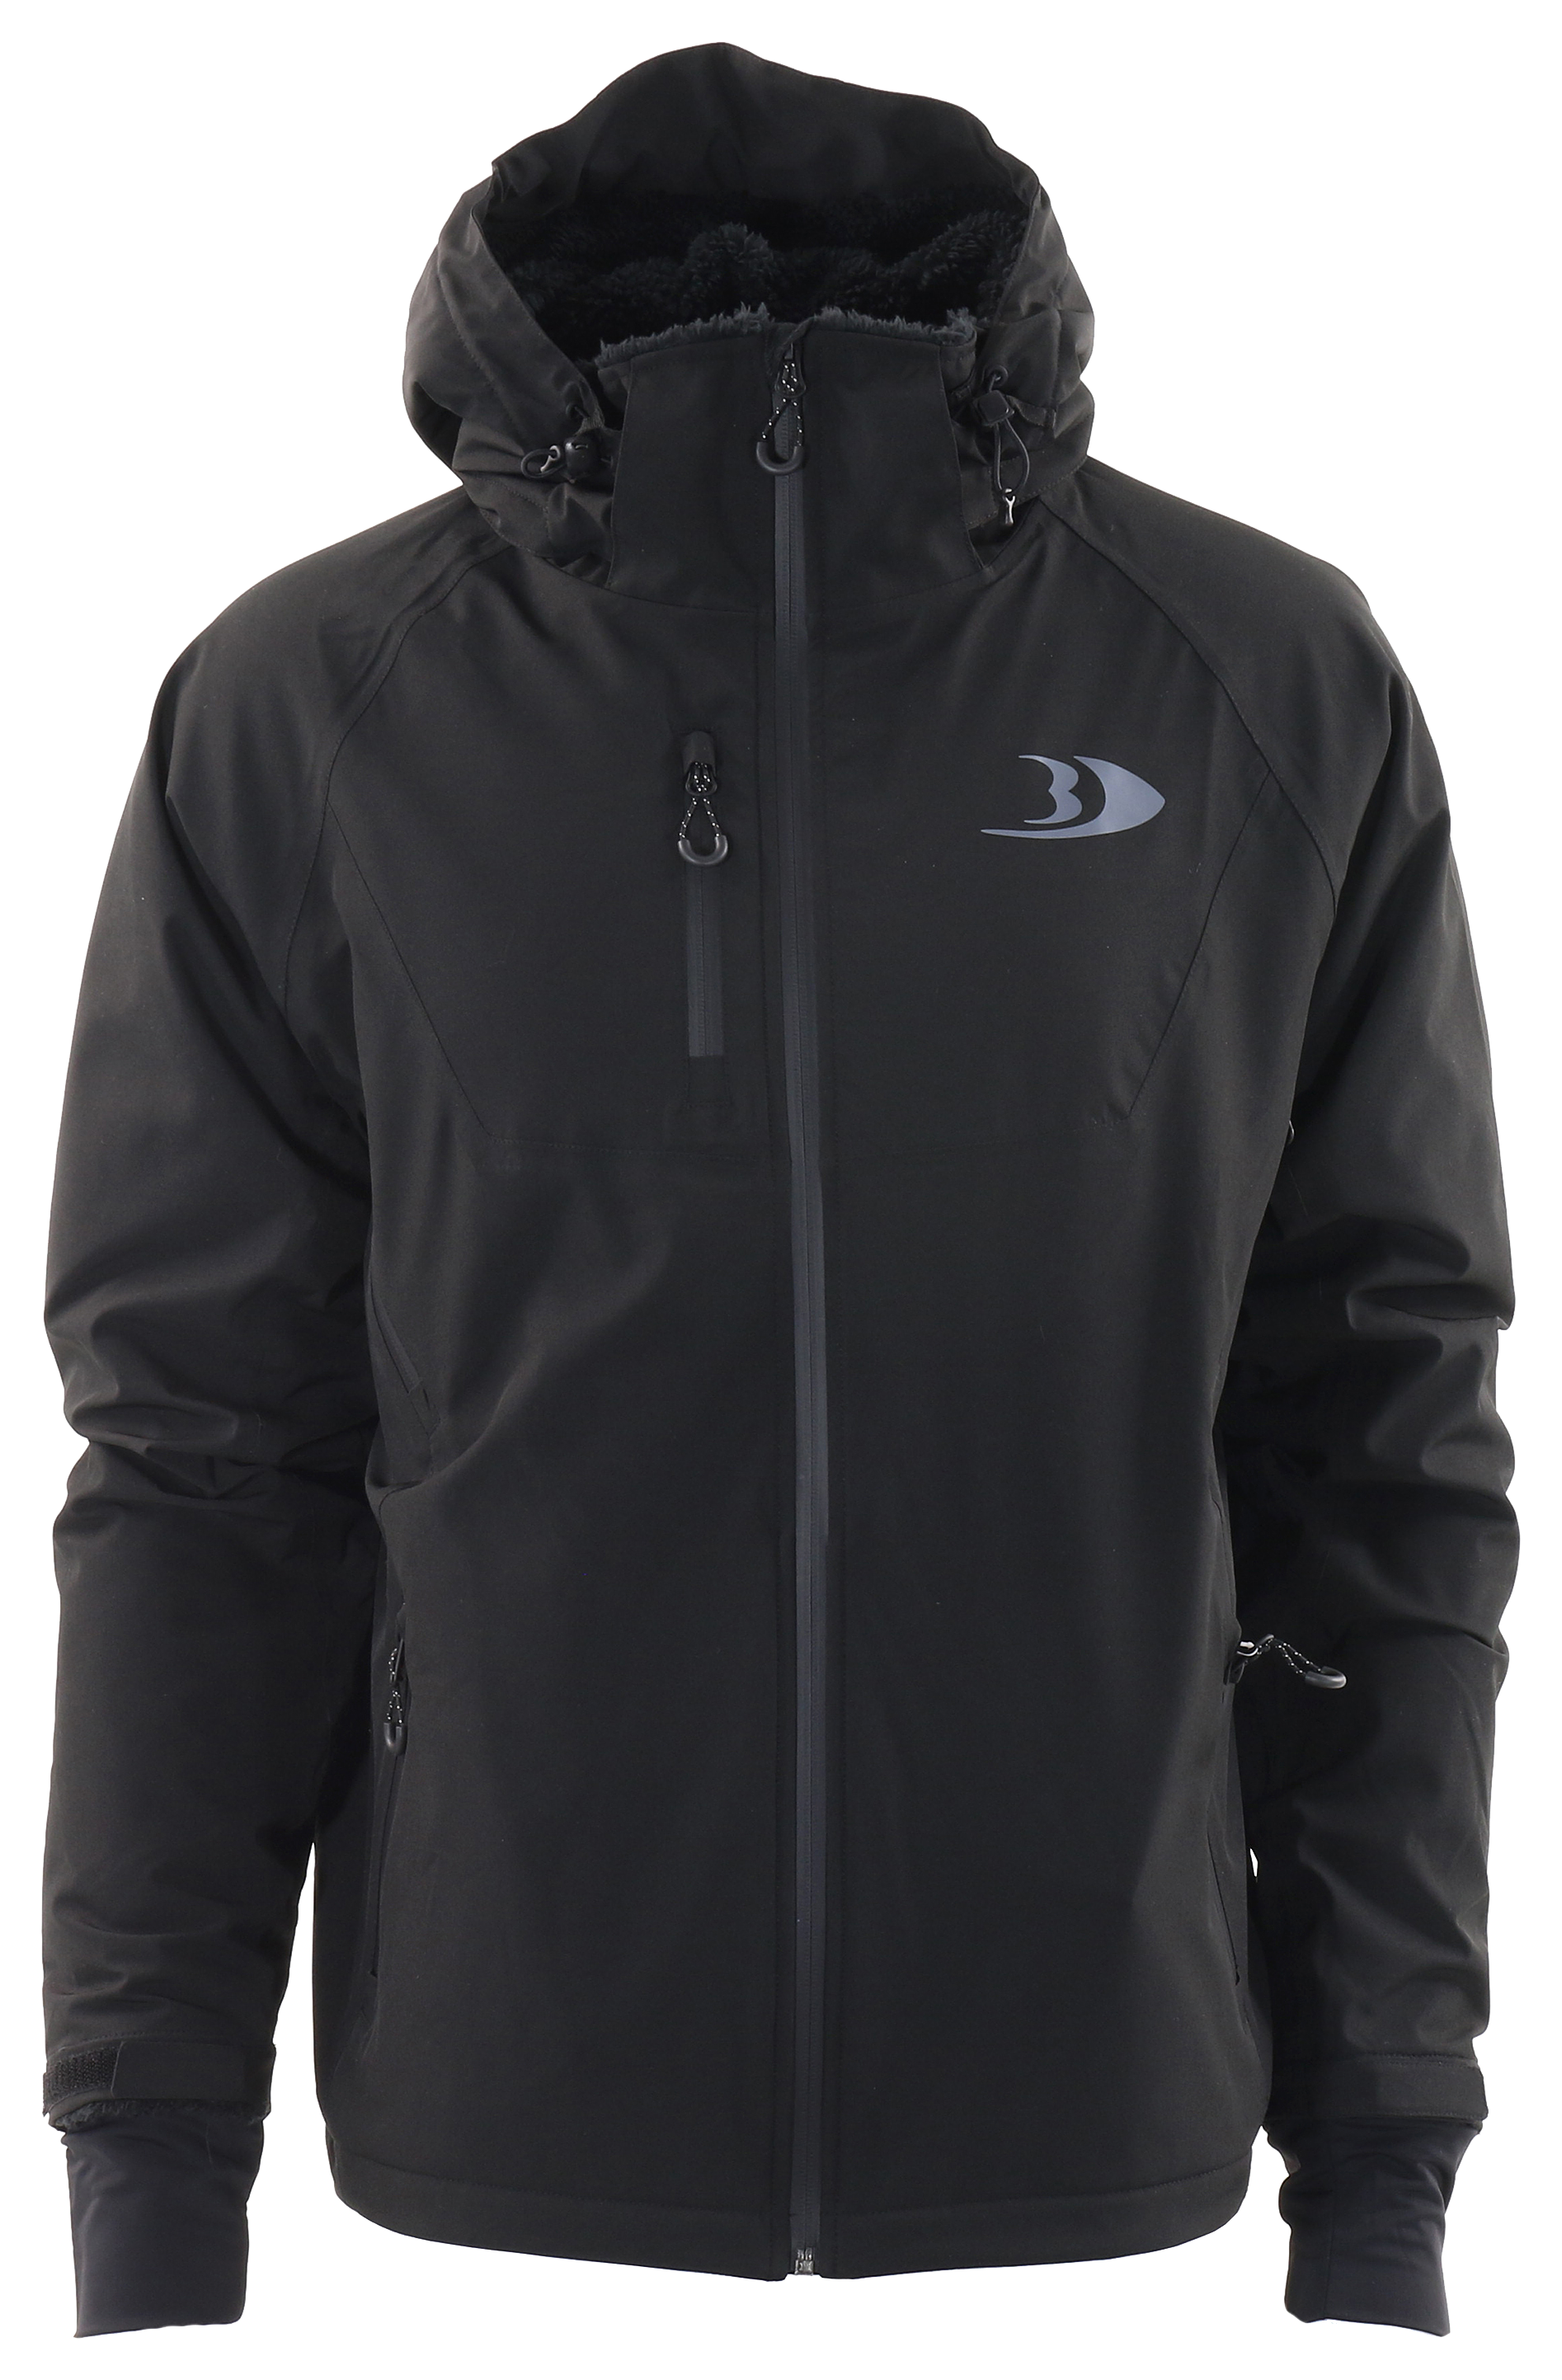 Blackfish Stormskin Gale Jacket for Men